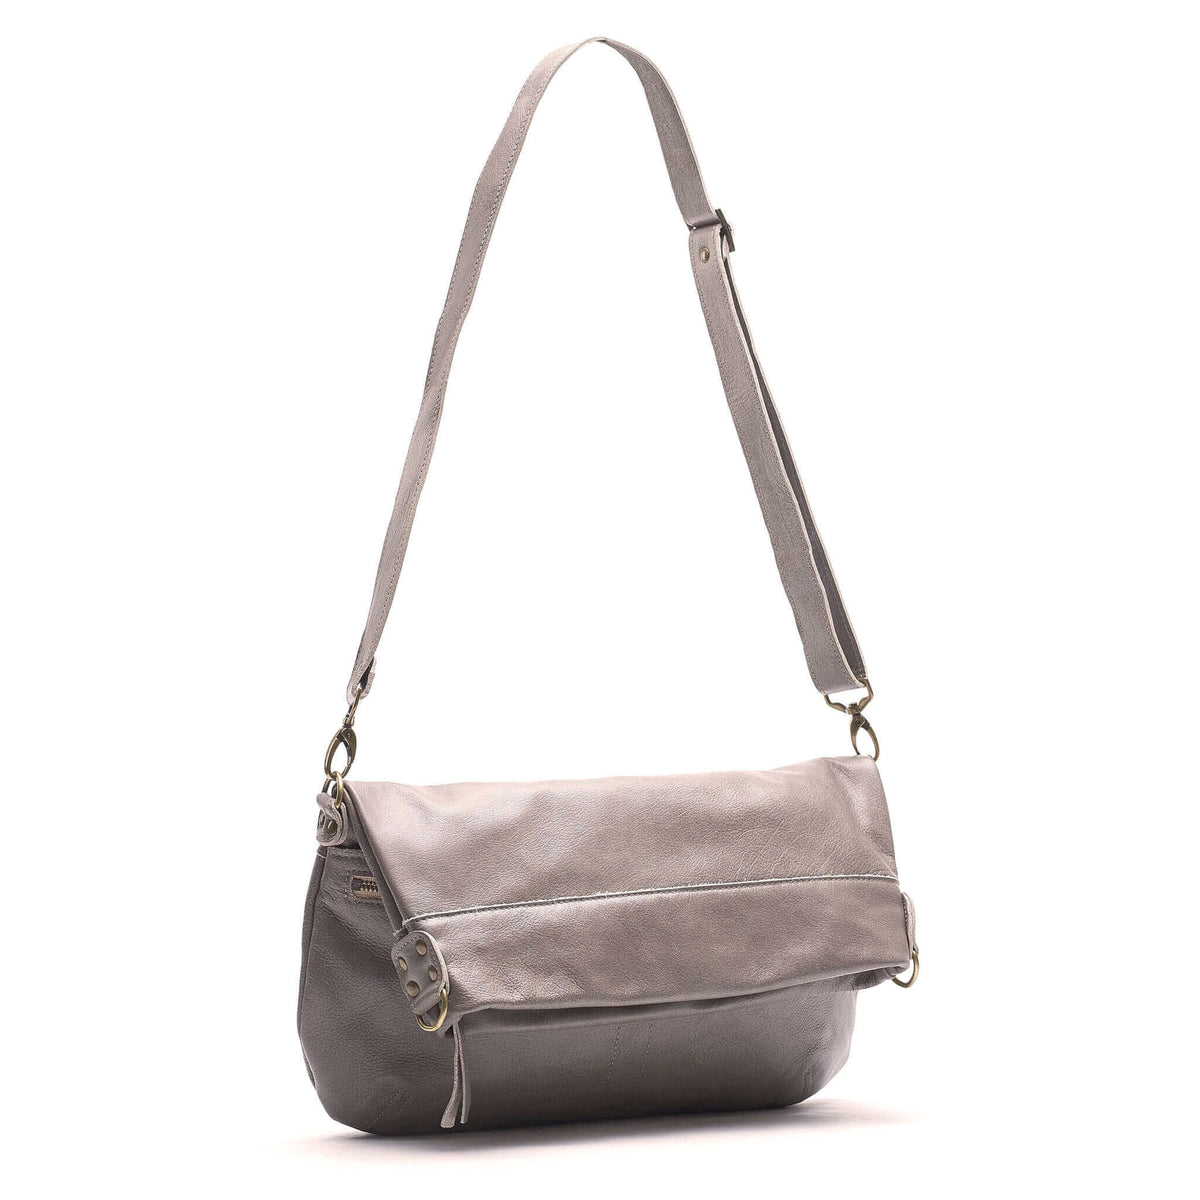 Grey 6-in-1 leather crossbody backpack - Brynn Capella, USA (folded over)